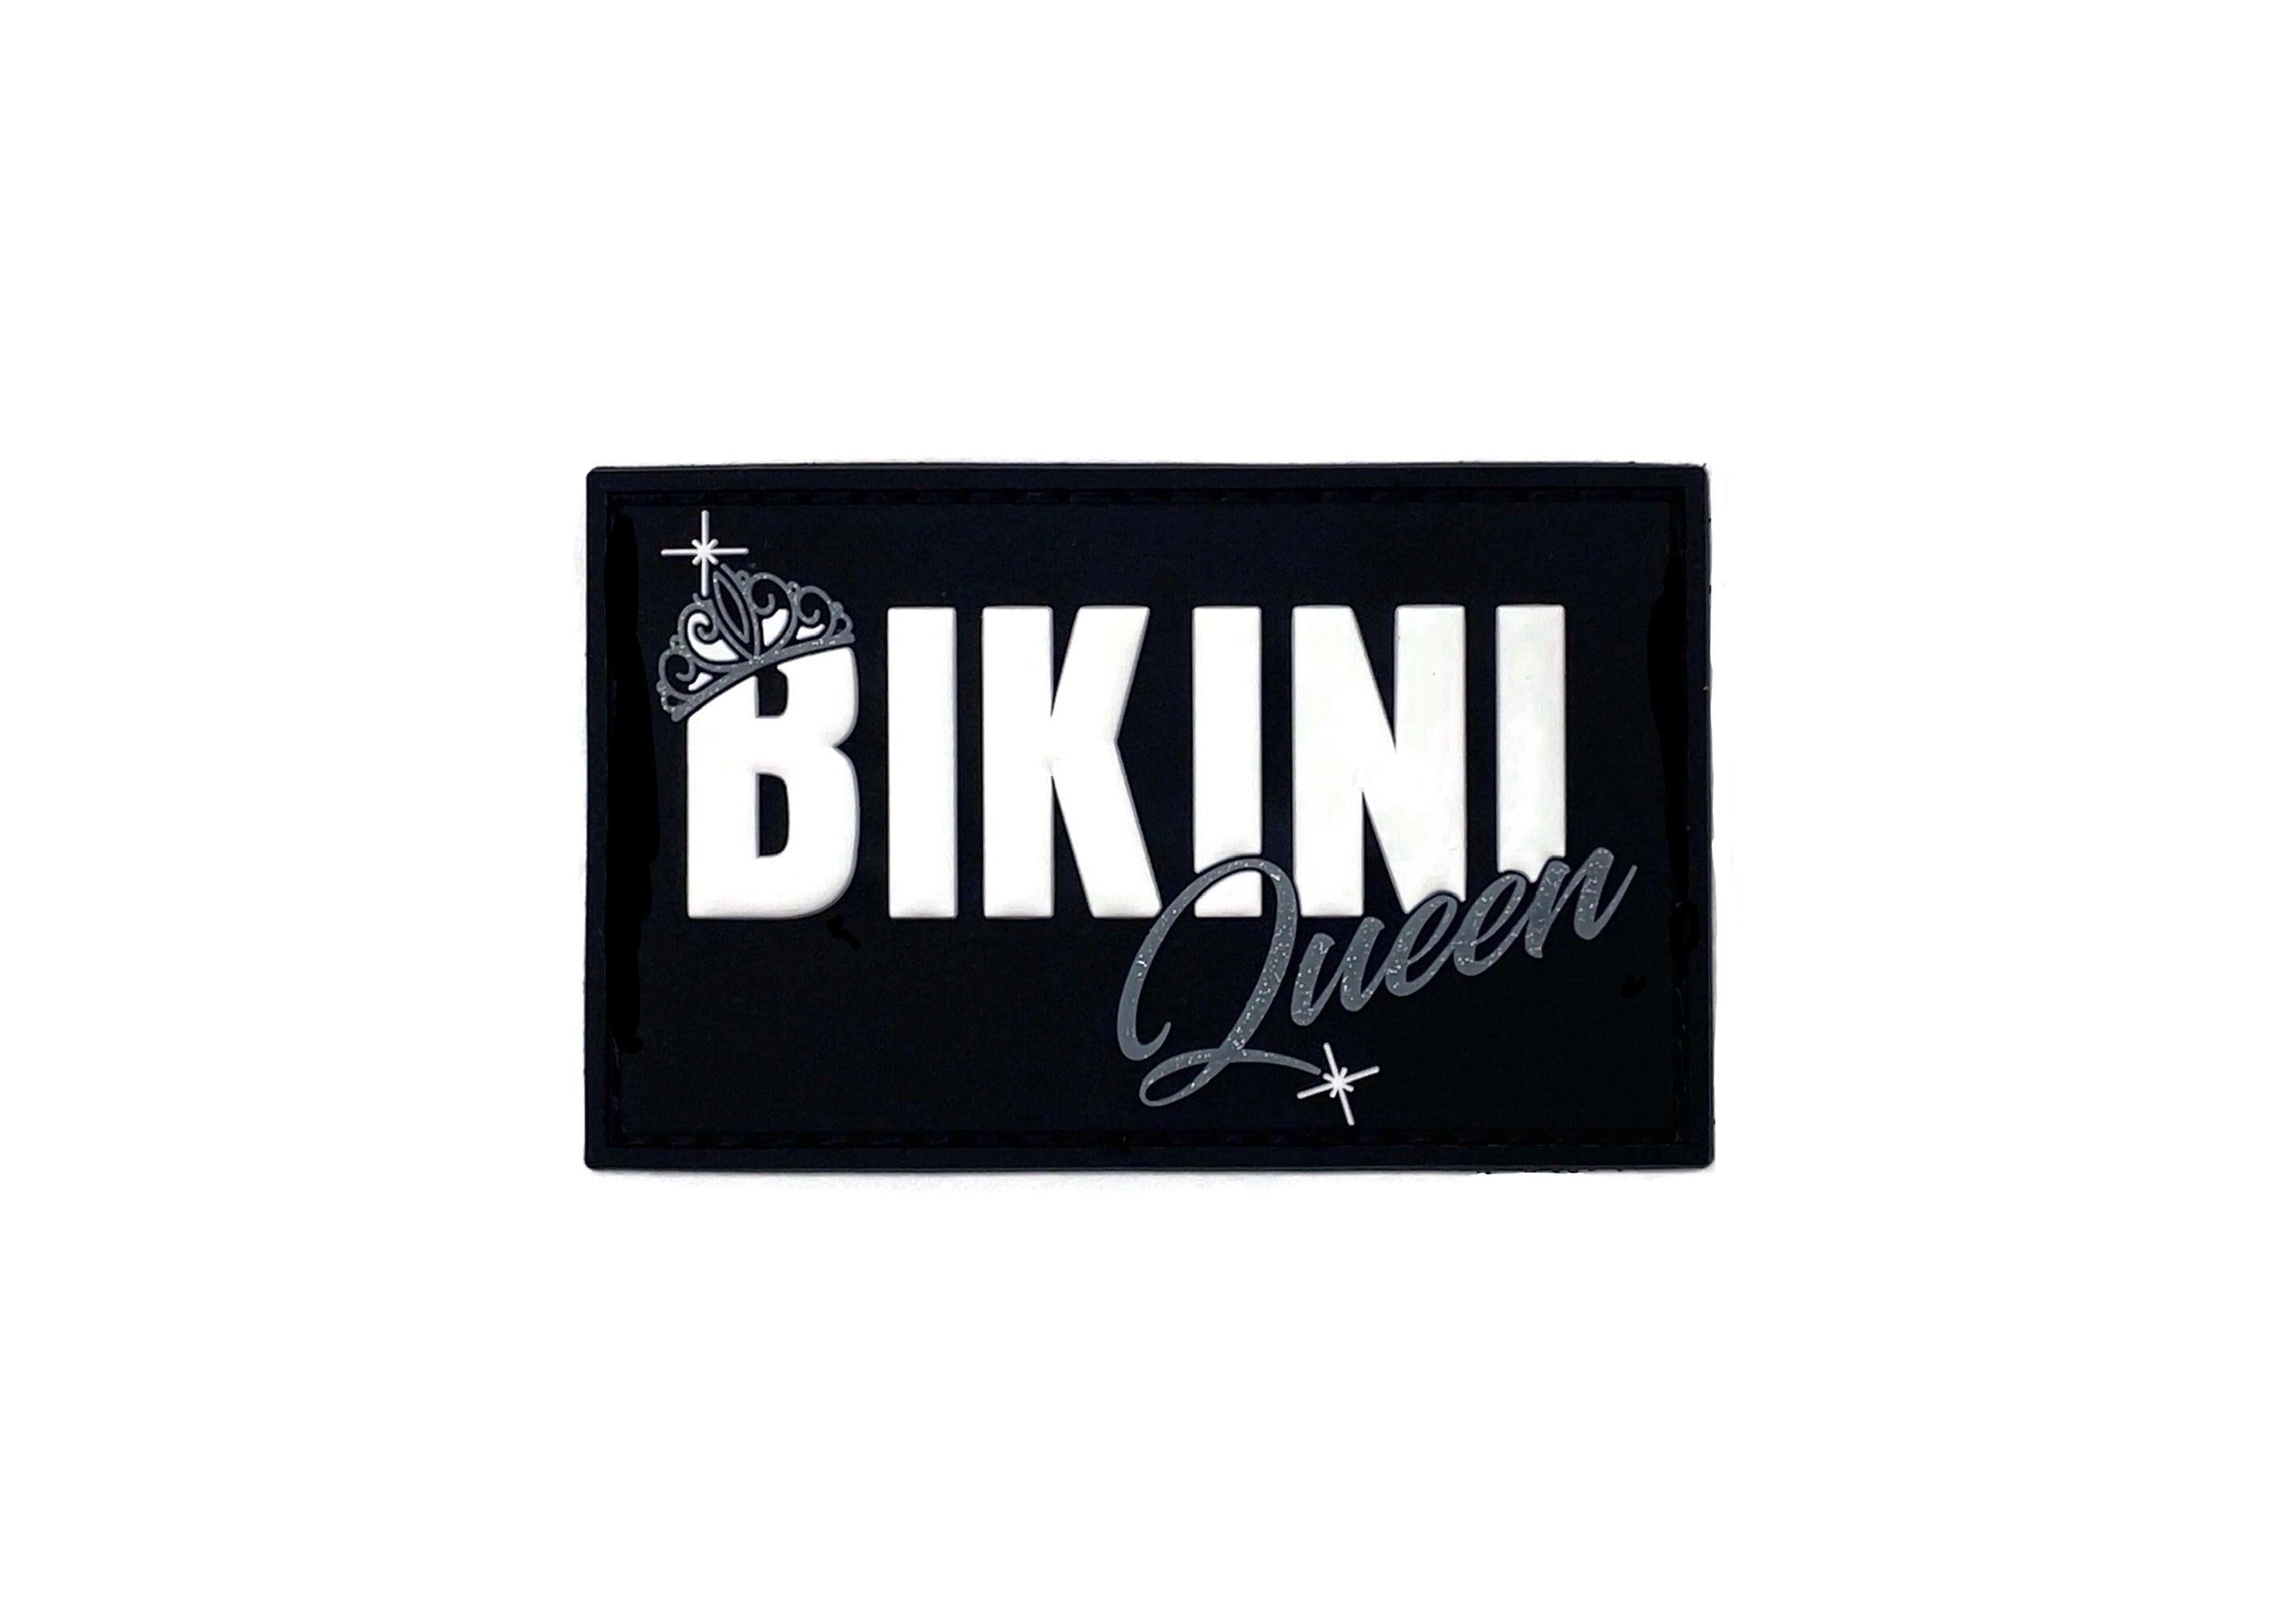 Bikini Queen